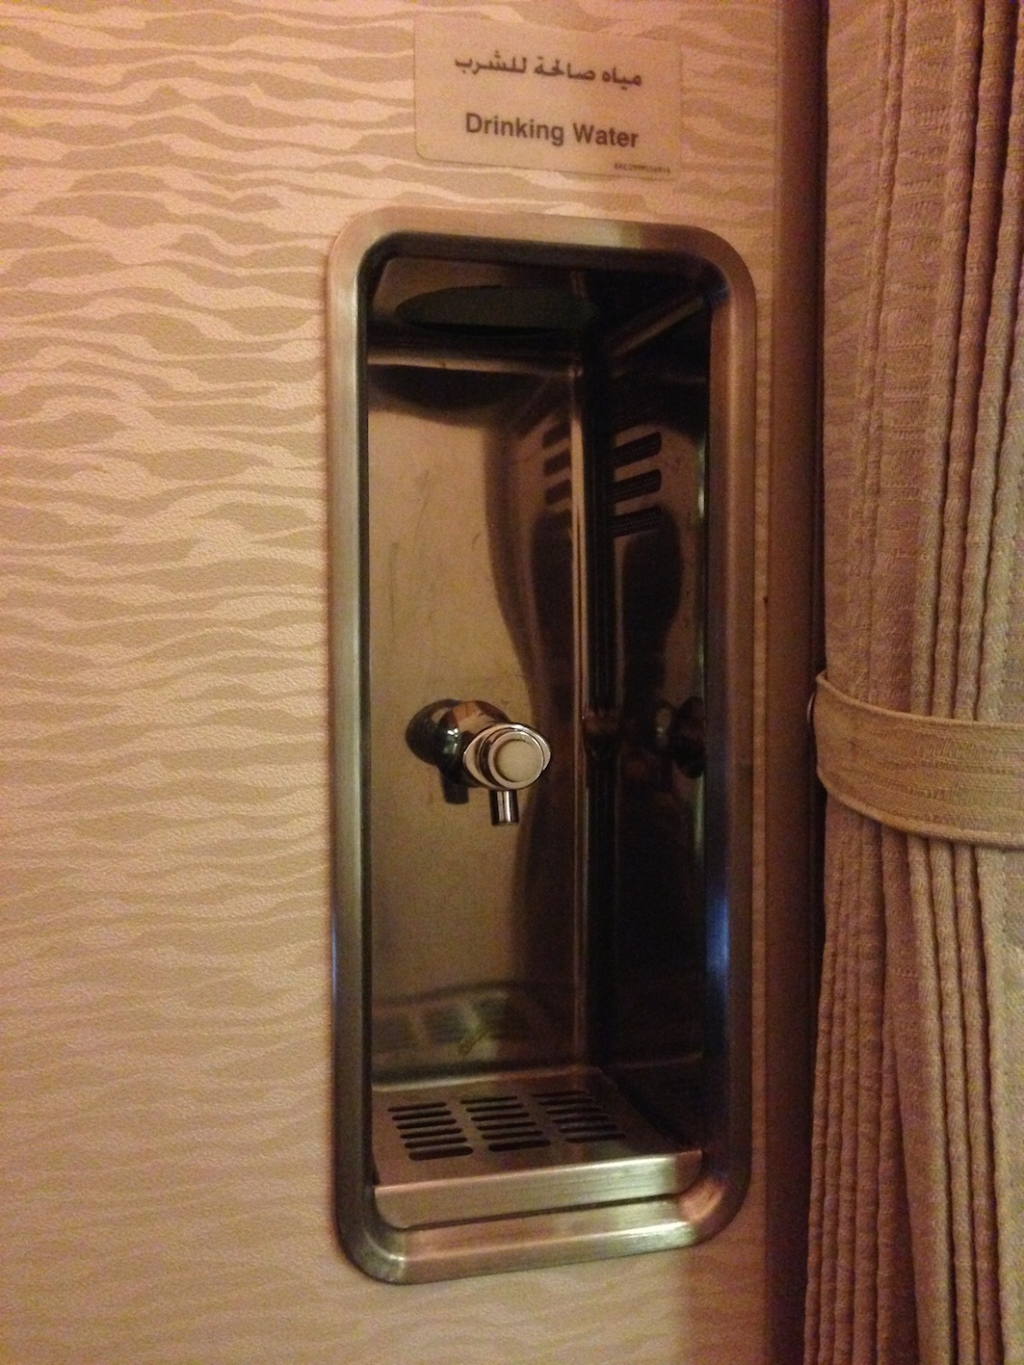 photo 072) Drinking Water Dispenser